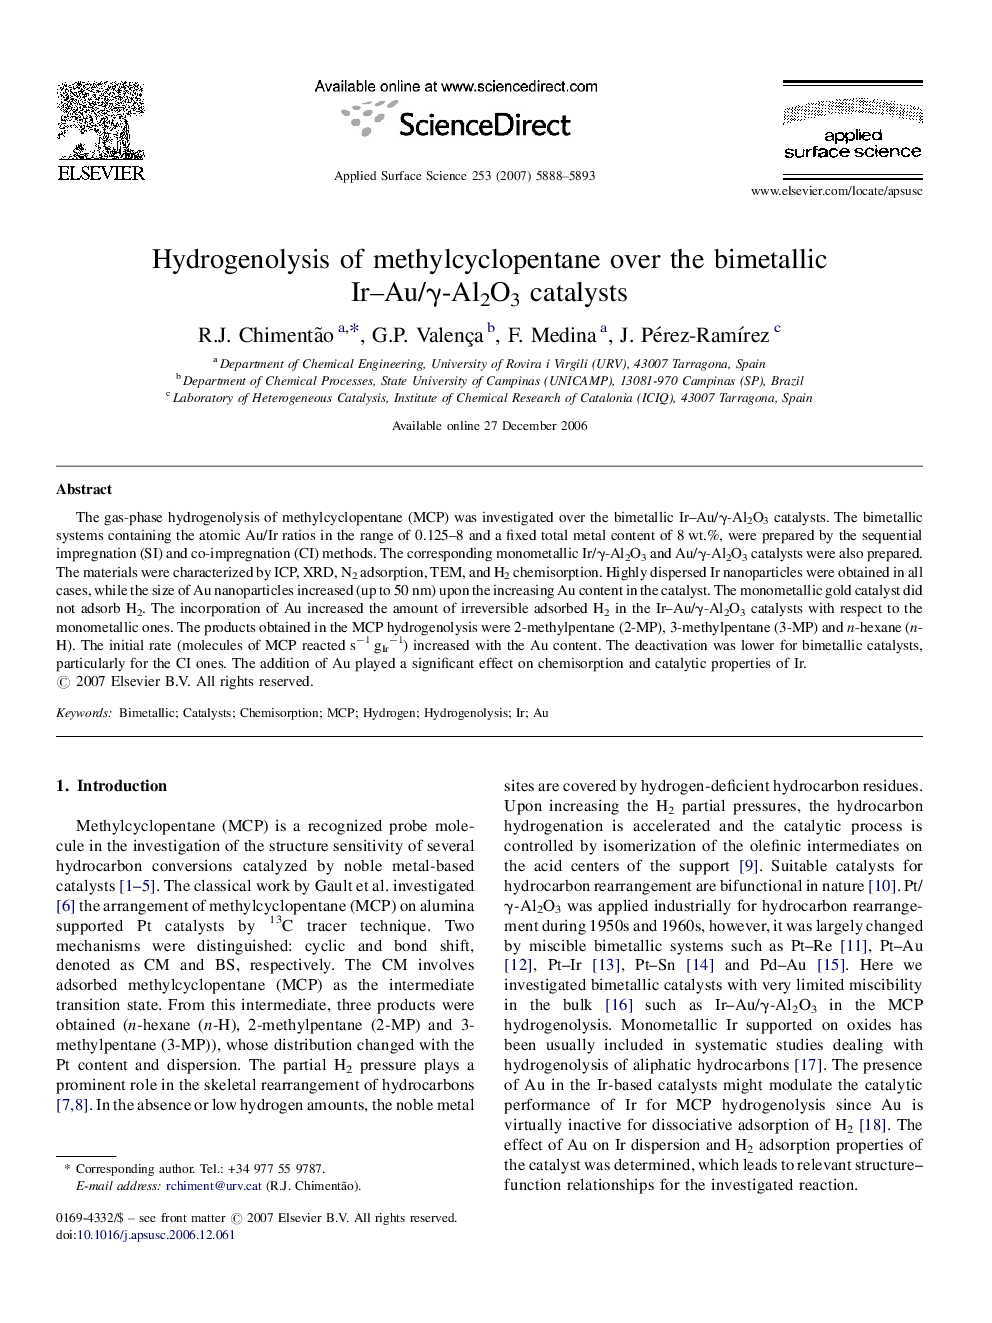 Hydrogenolysis of methylcyclopentane over the bimetallic Ir-Au/Î³-Al2O3 catalysts